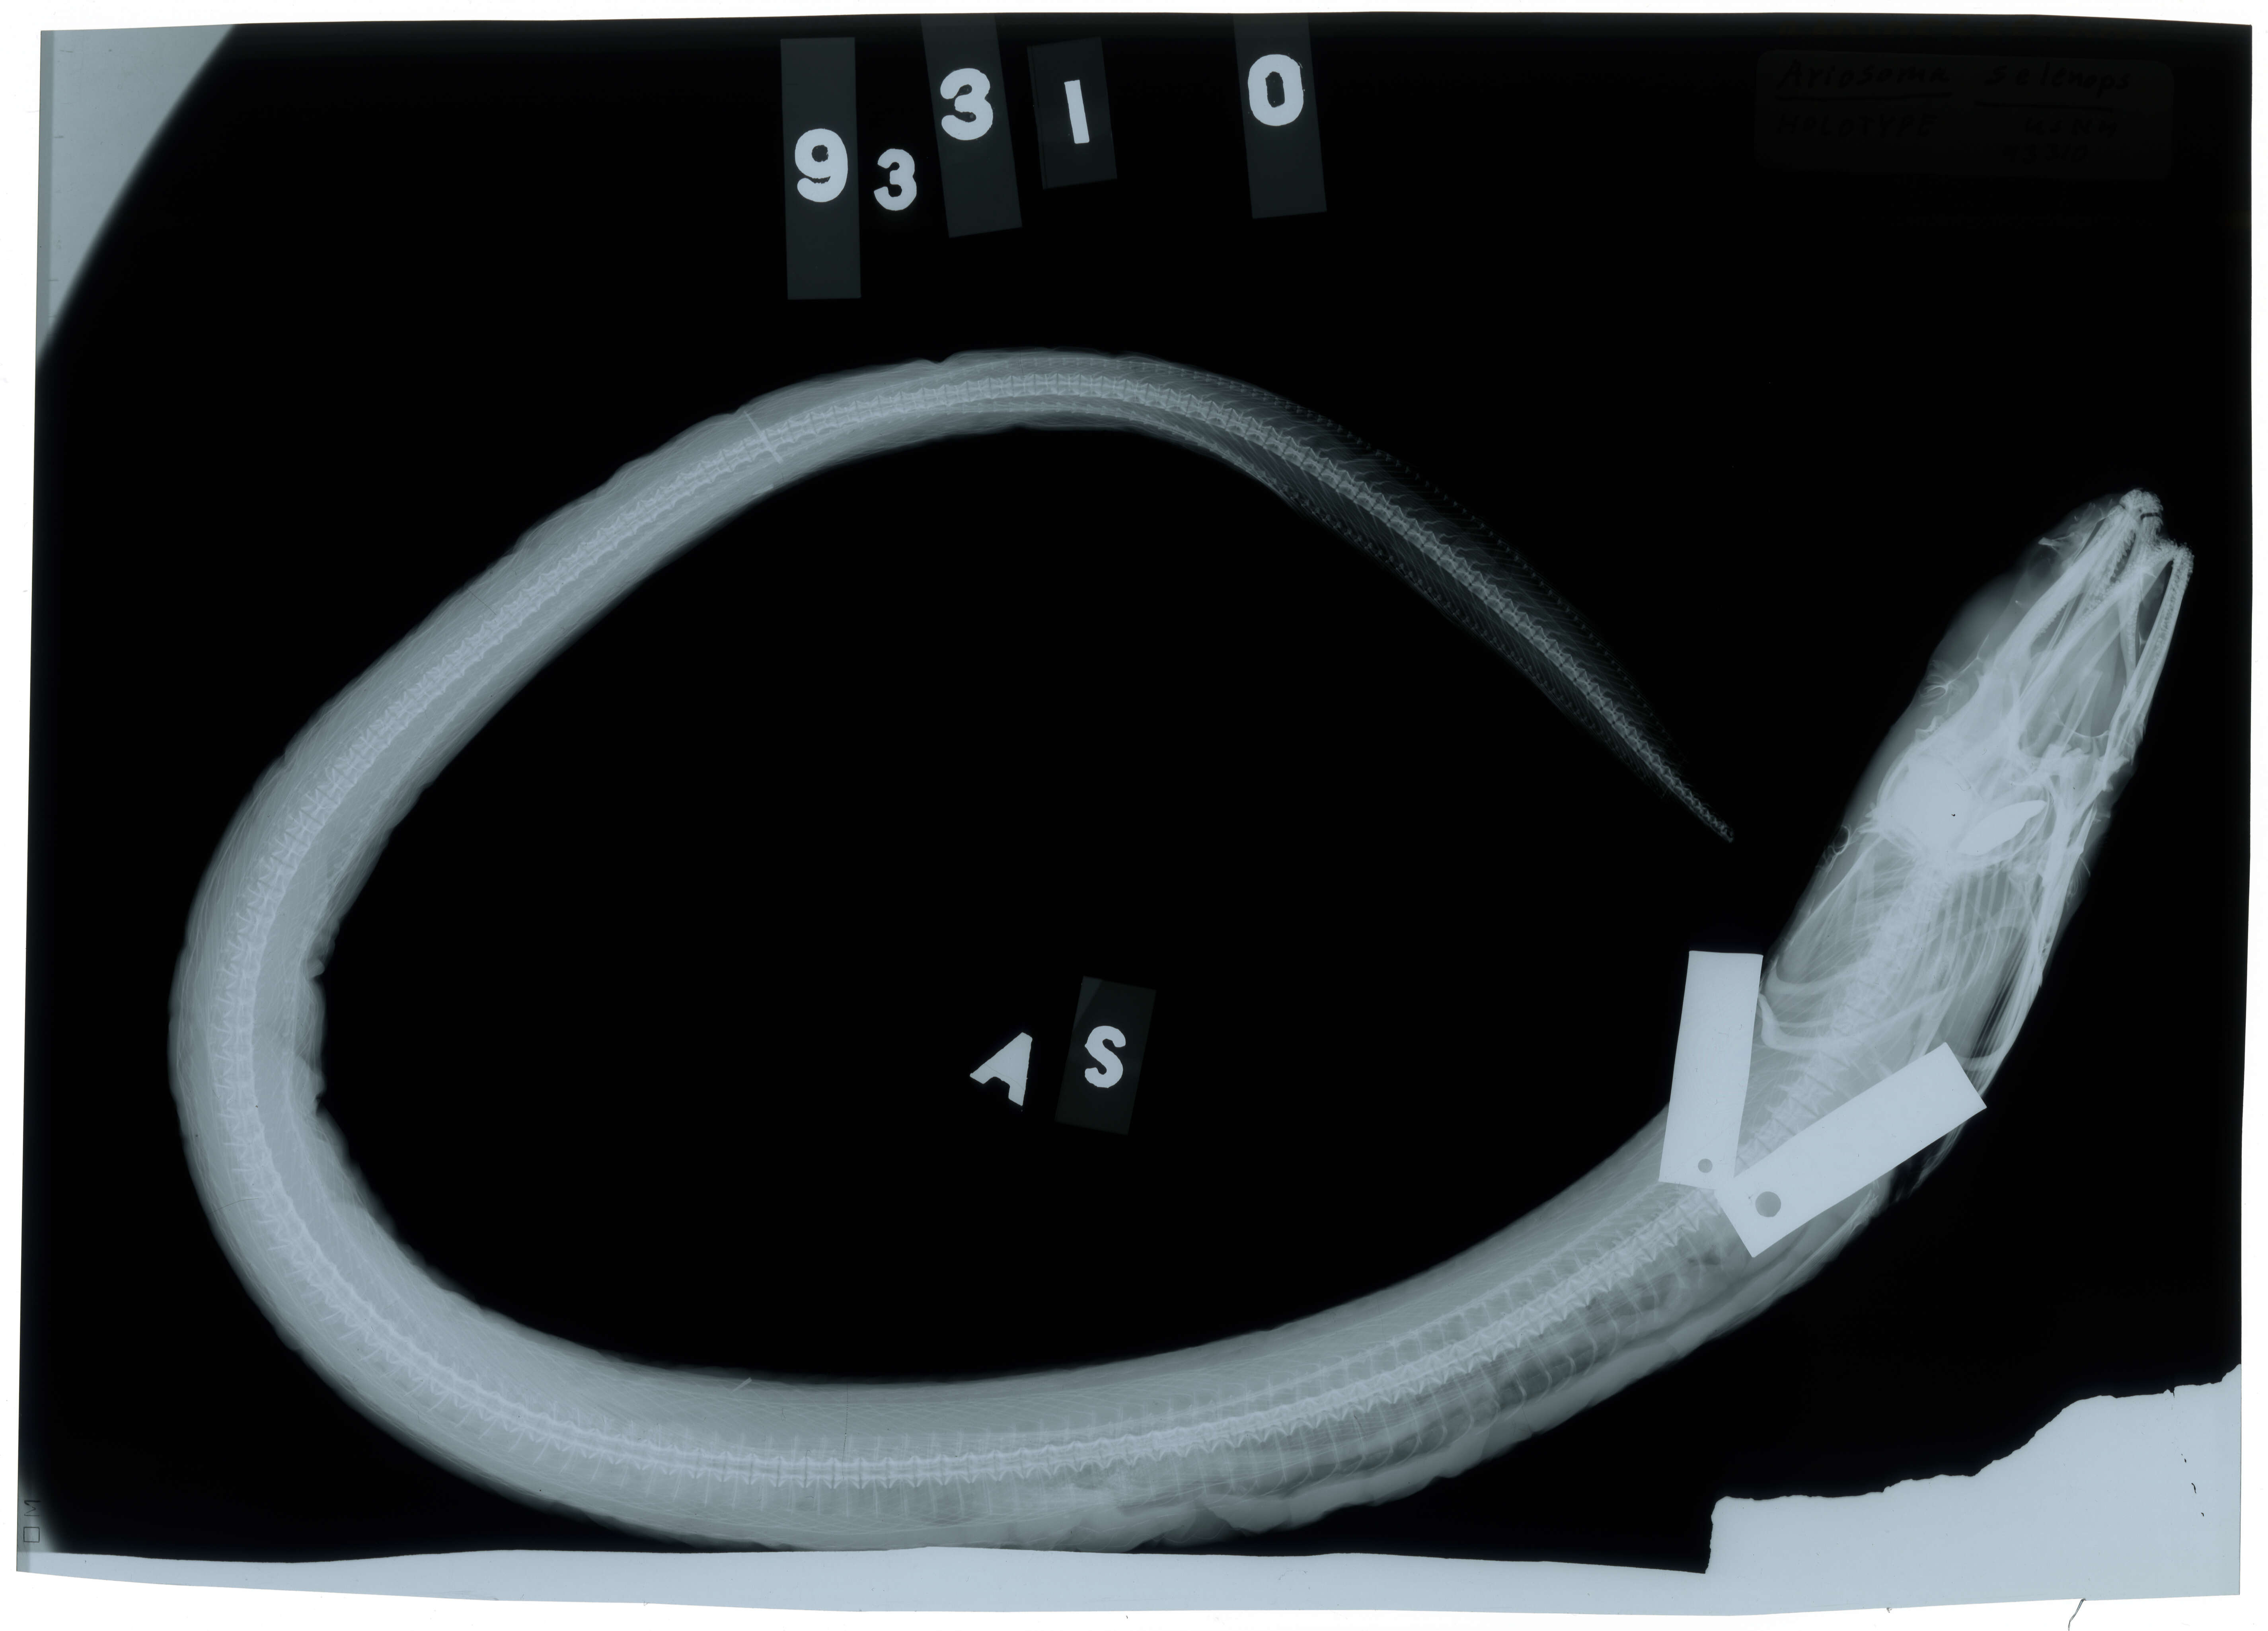 Image of Ariosoma selenops Reid 1934